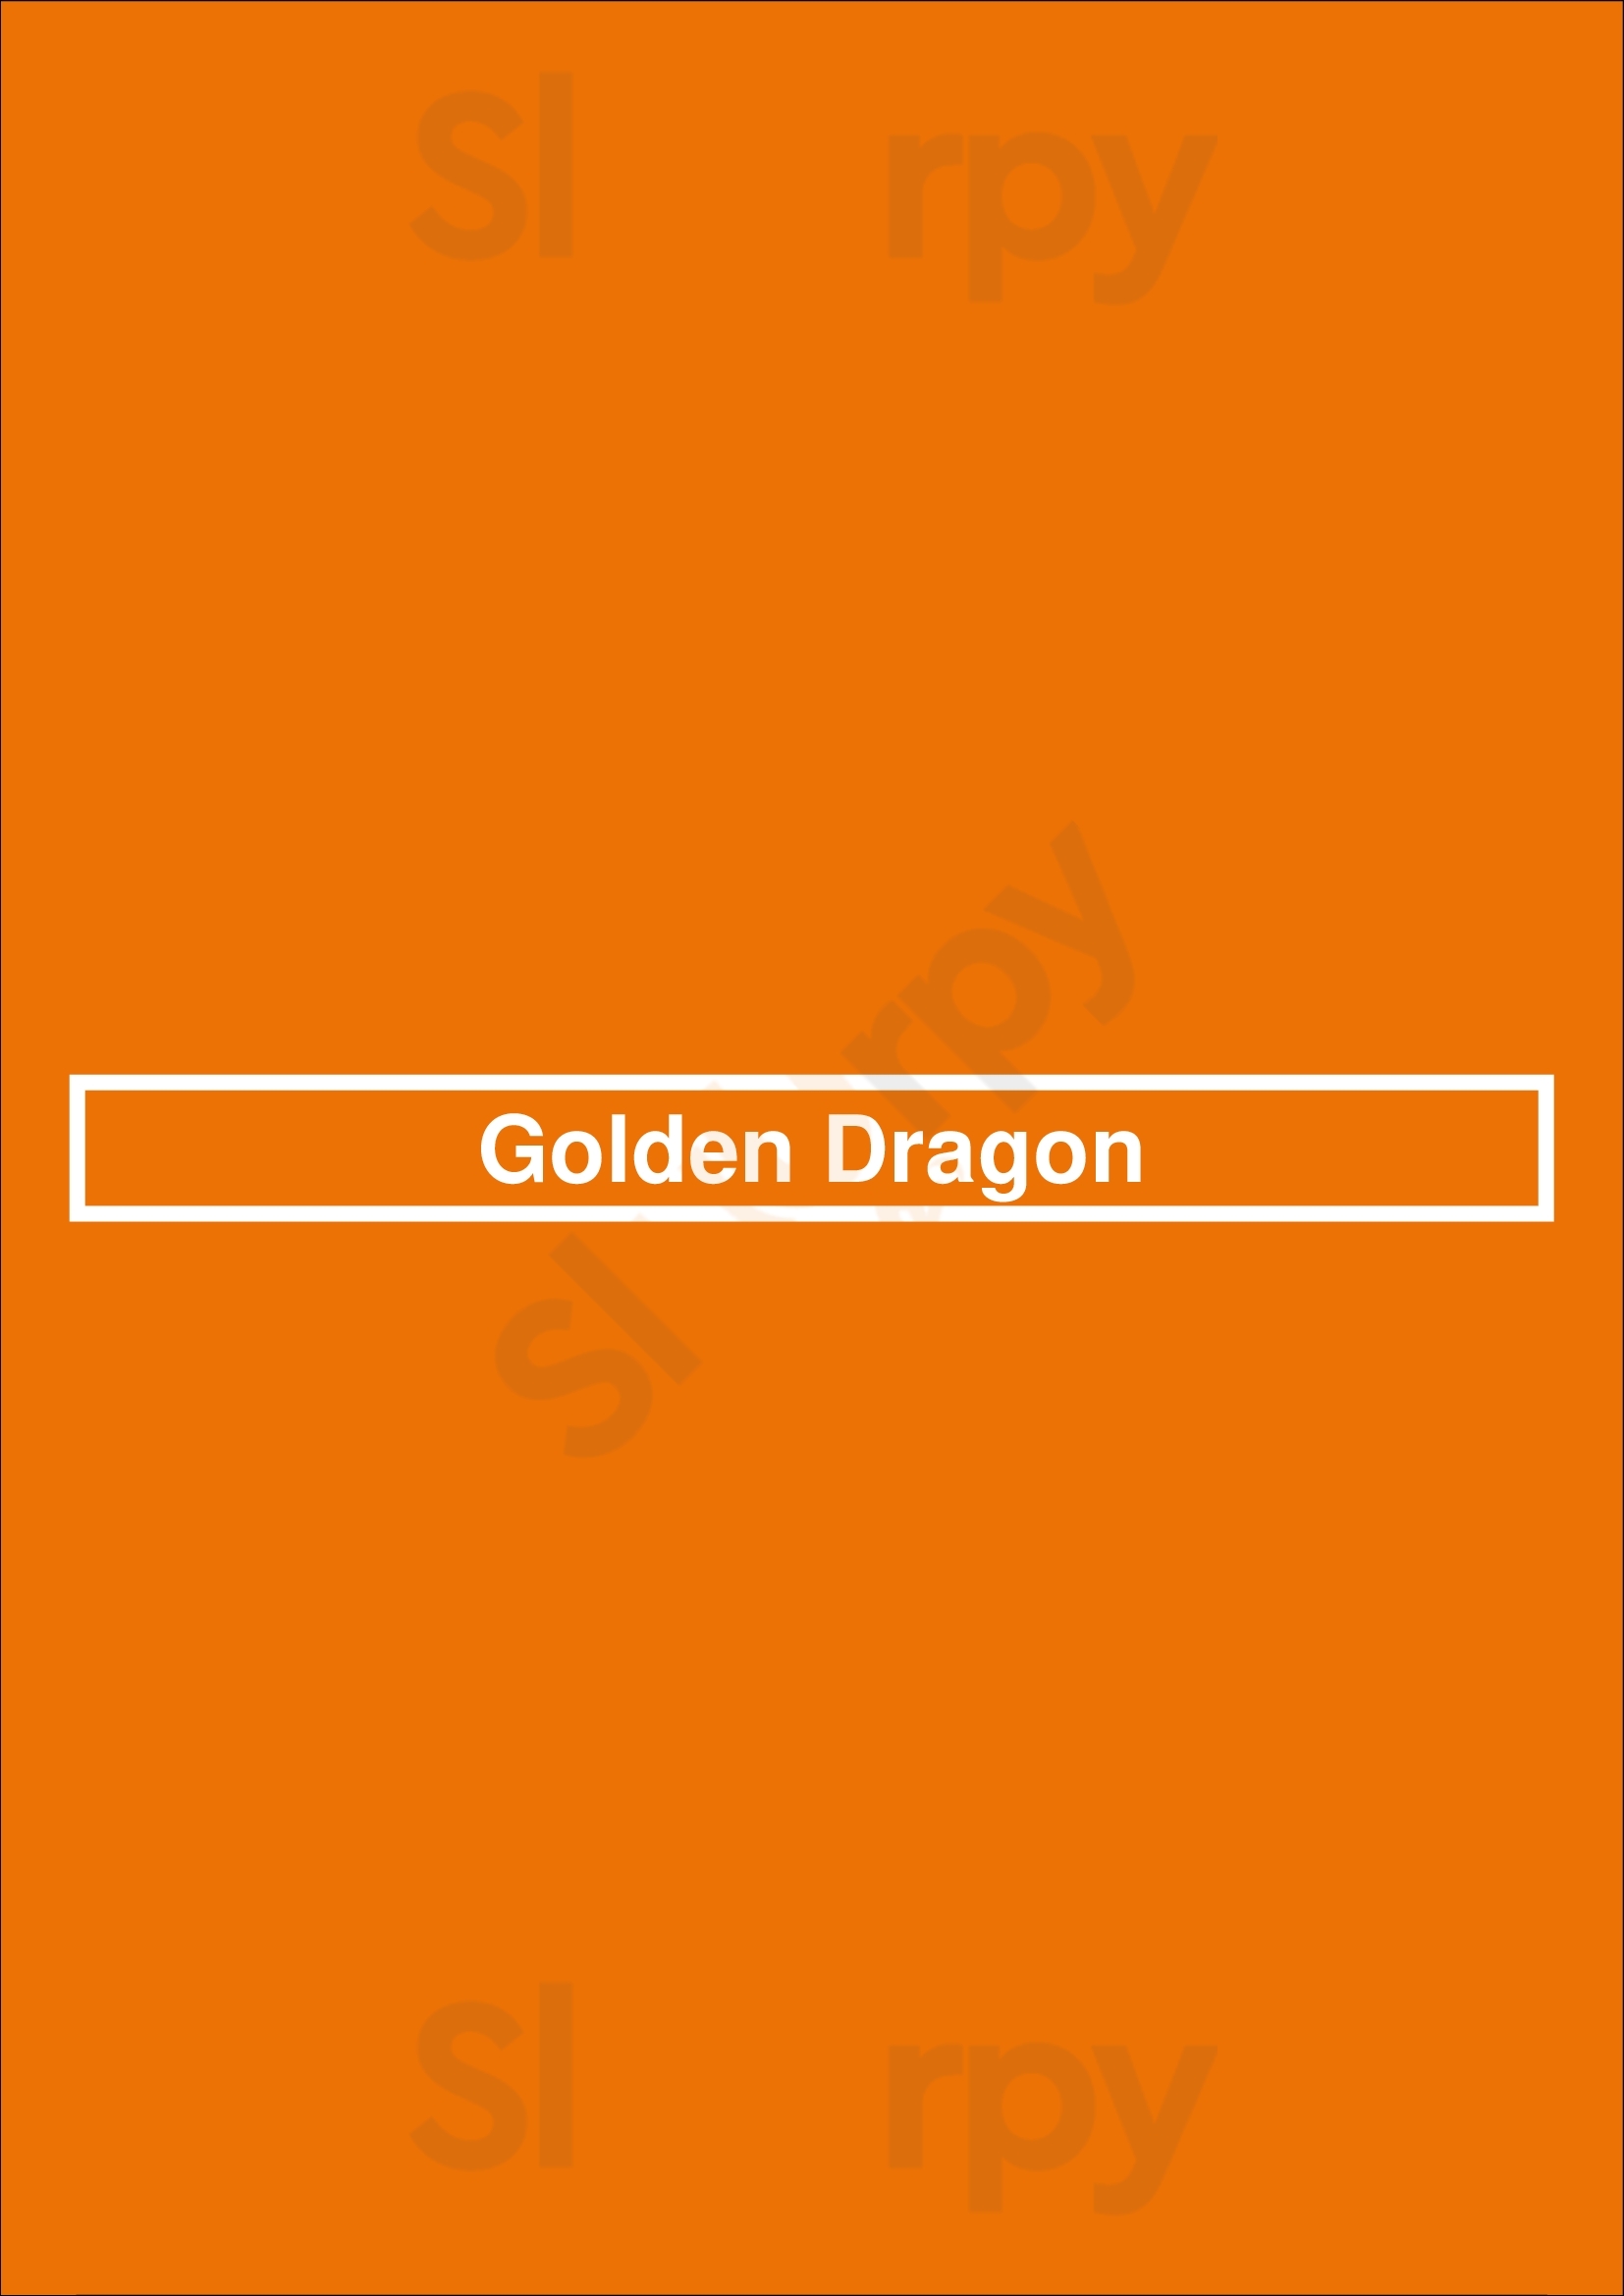 Golden Dragon Glasgow Menu - 1